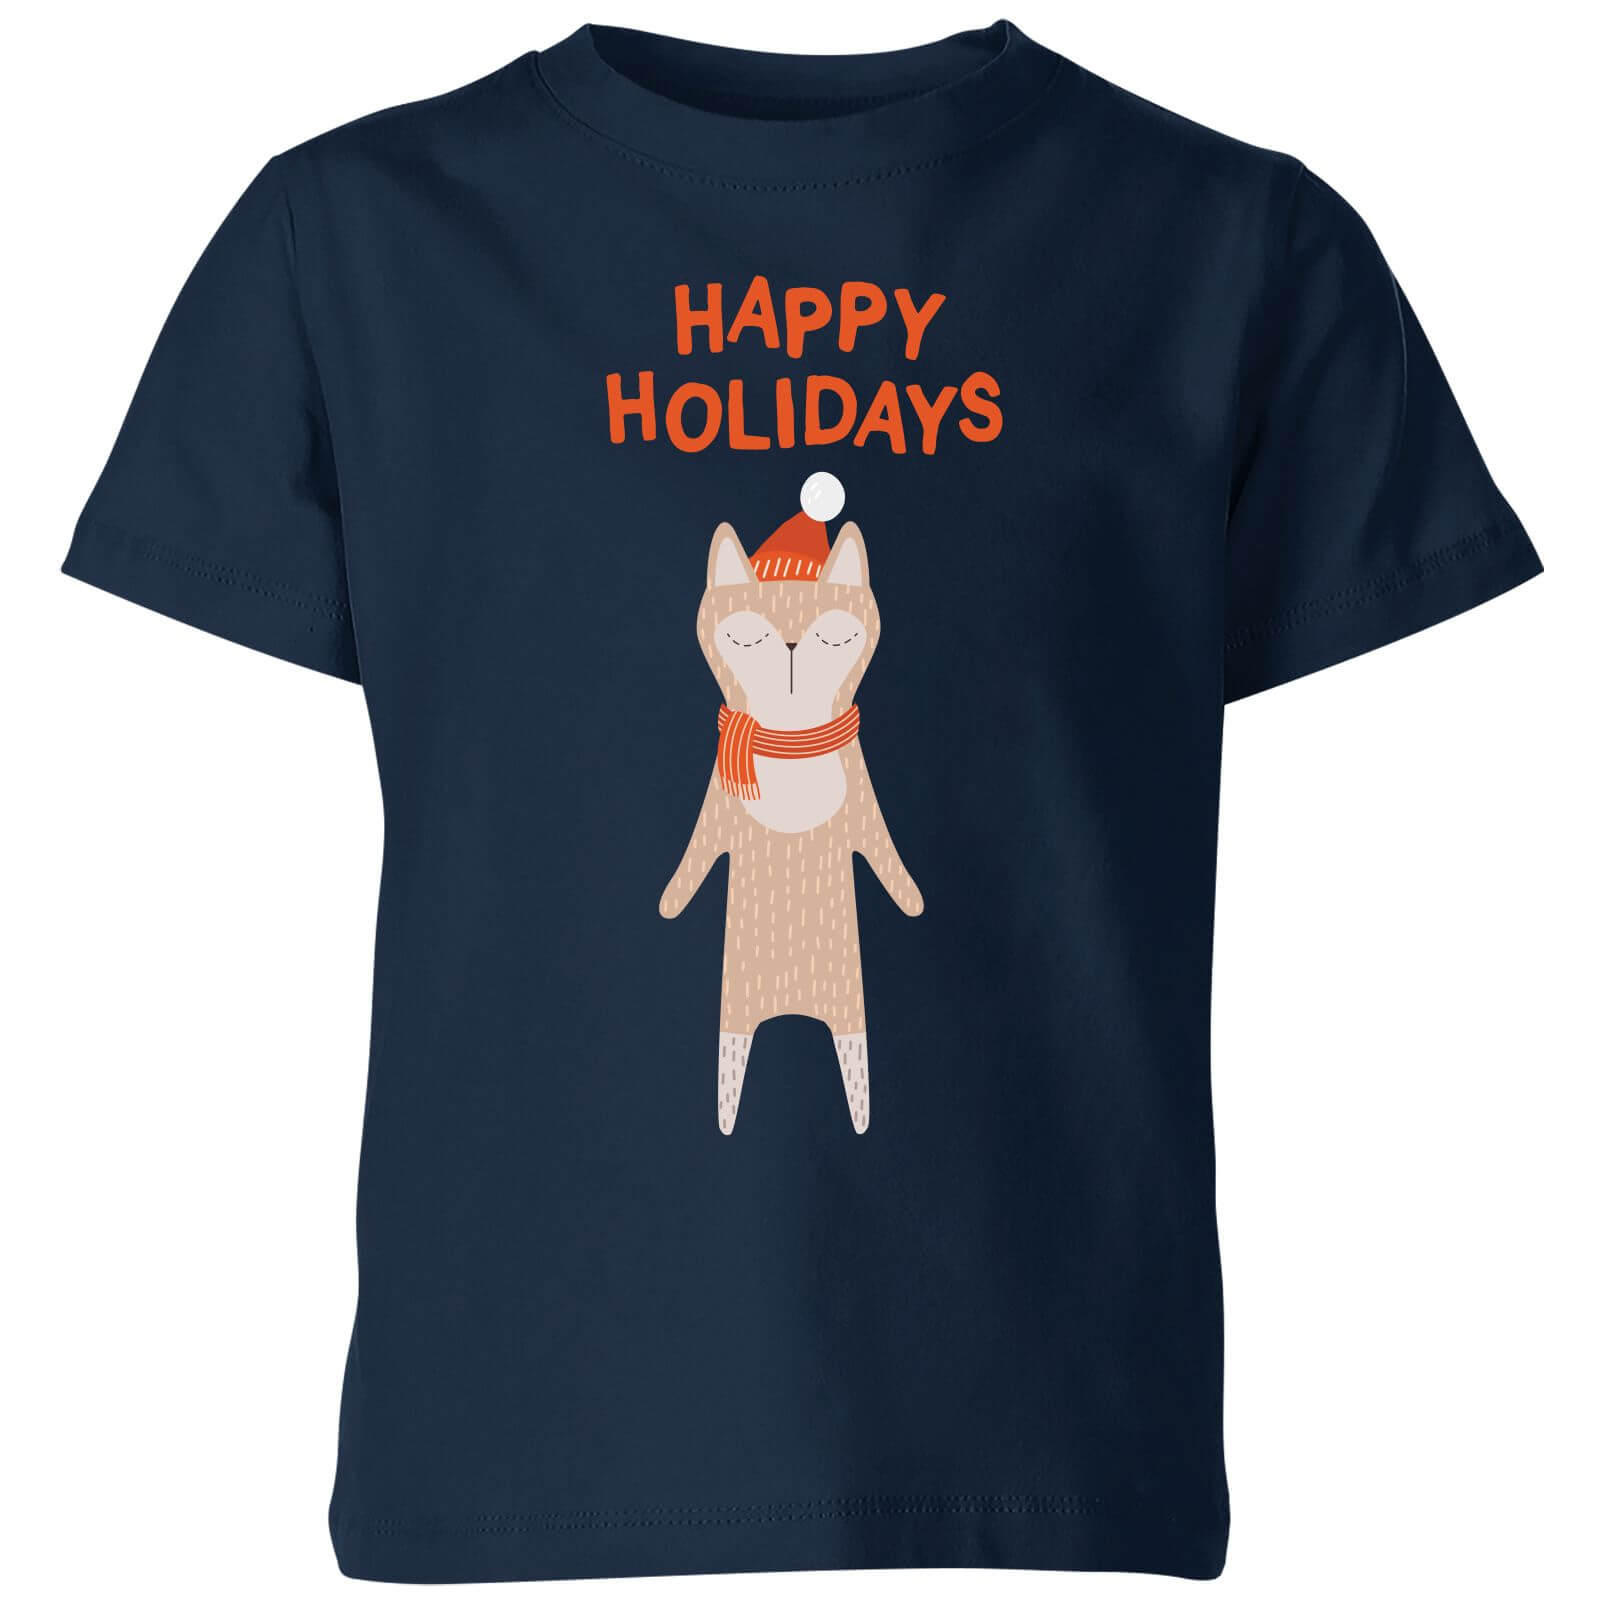 Happy Holidays Kids' T-Shirt - Navy - 3-4 Years - Navy